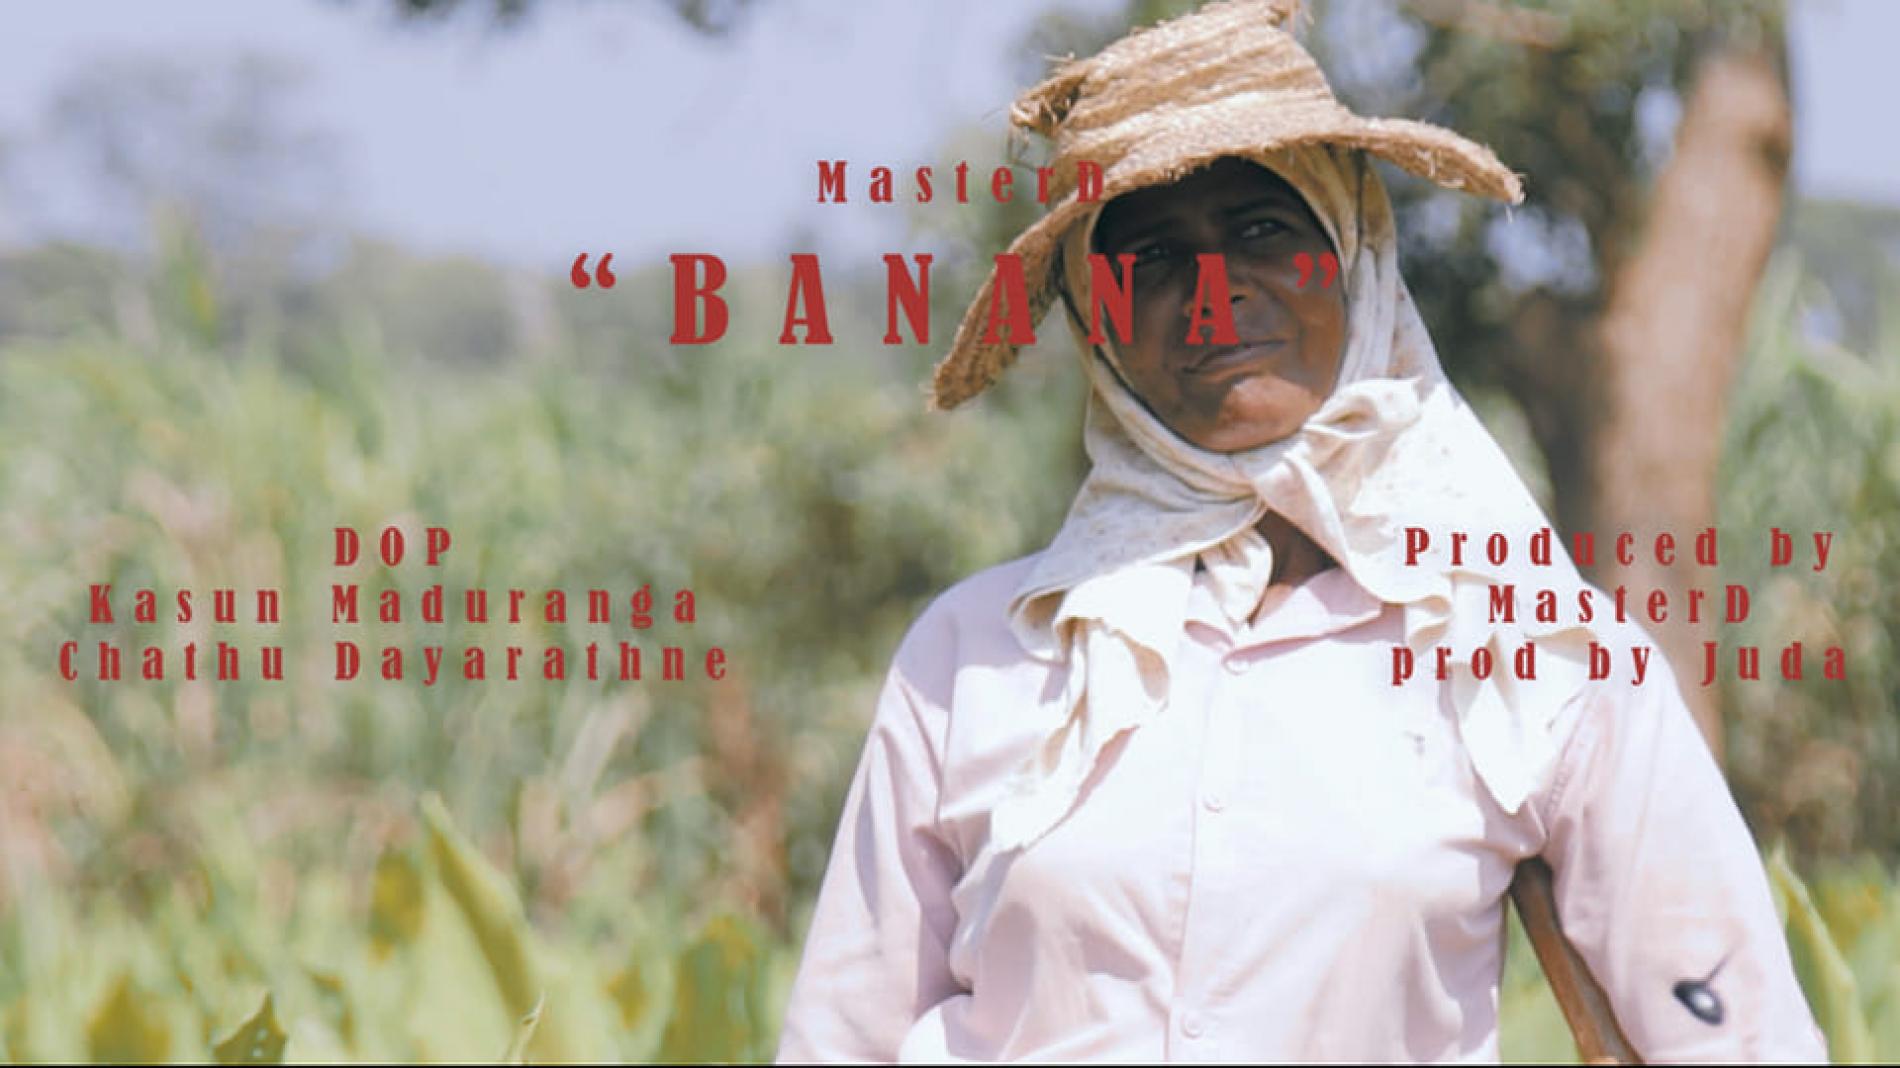 New Music : MasterD – Banana (බනානා) Ft Juda (Official Music Video)